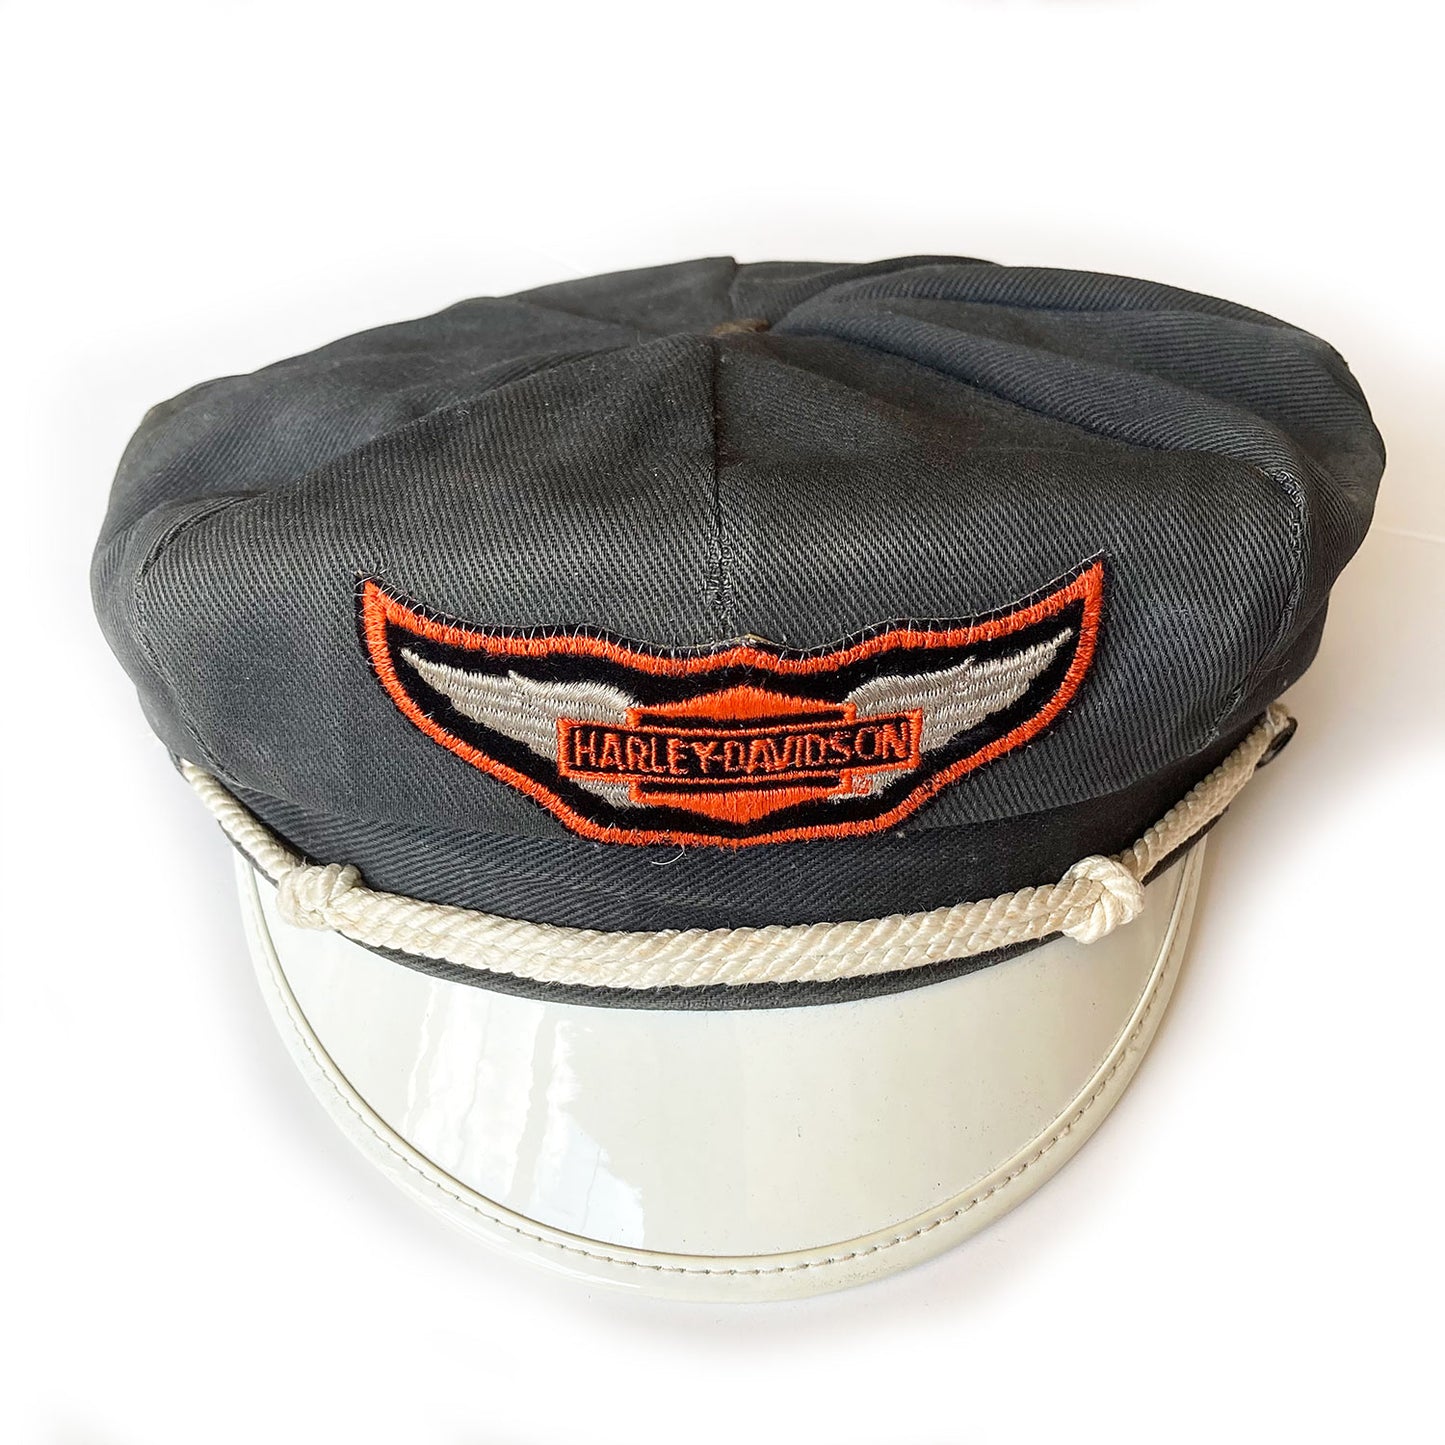 Harley-Davidson 1940s-'50s Captain's Hat, VERY RARE large 7 1/2!